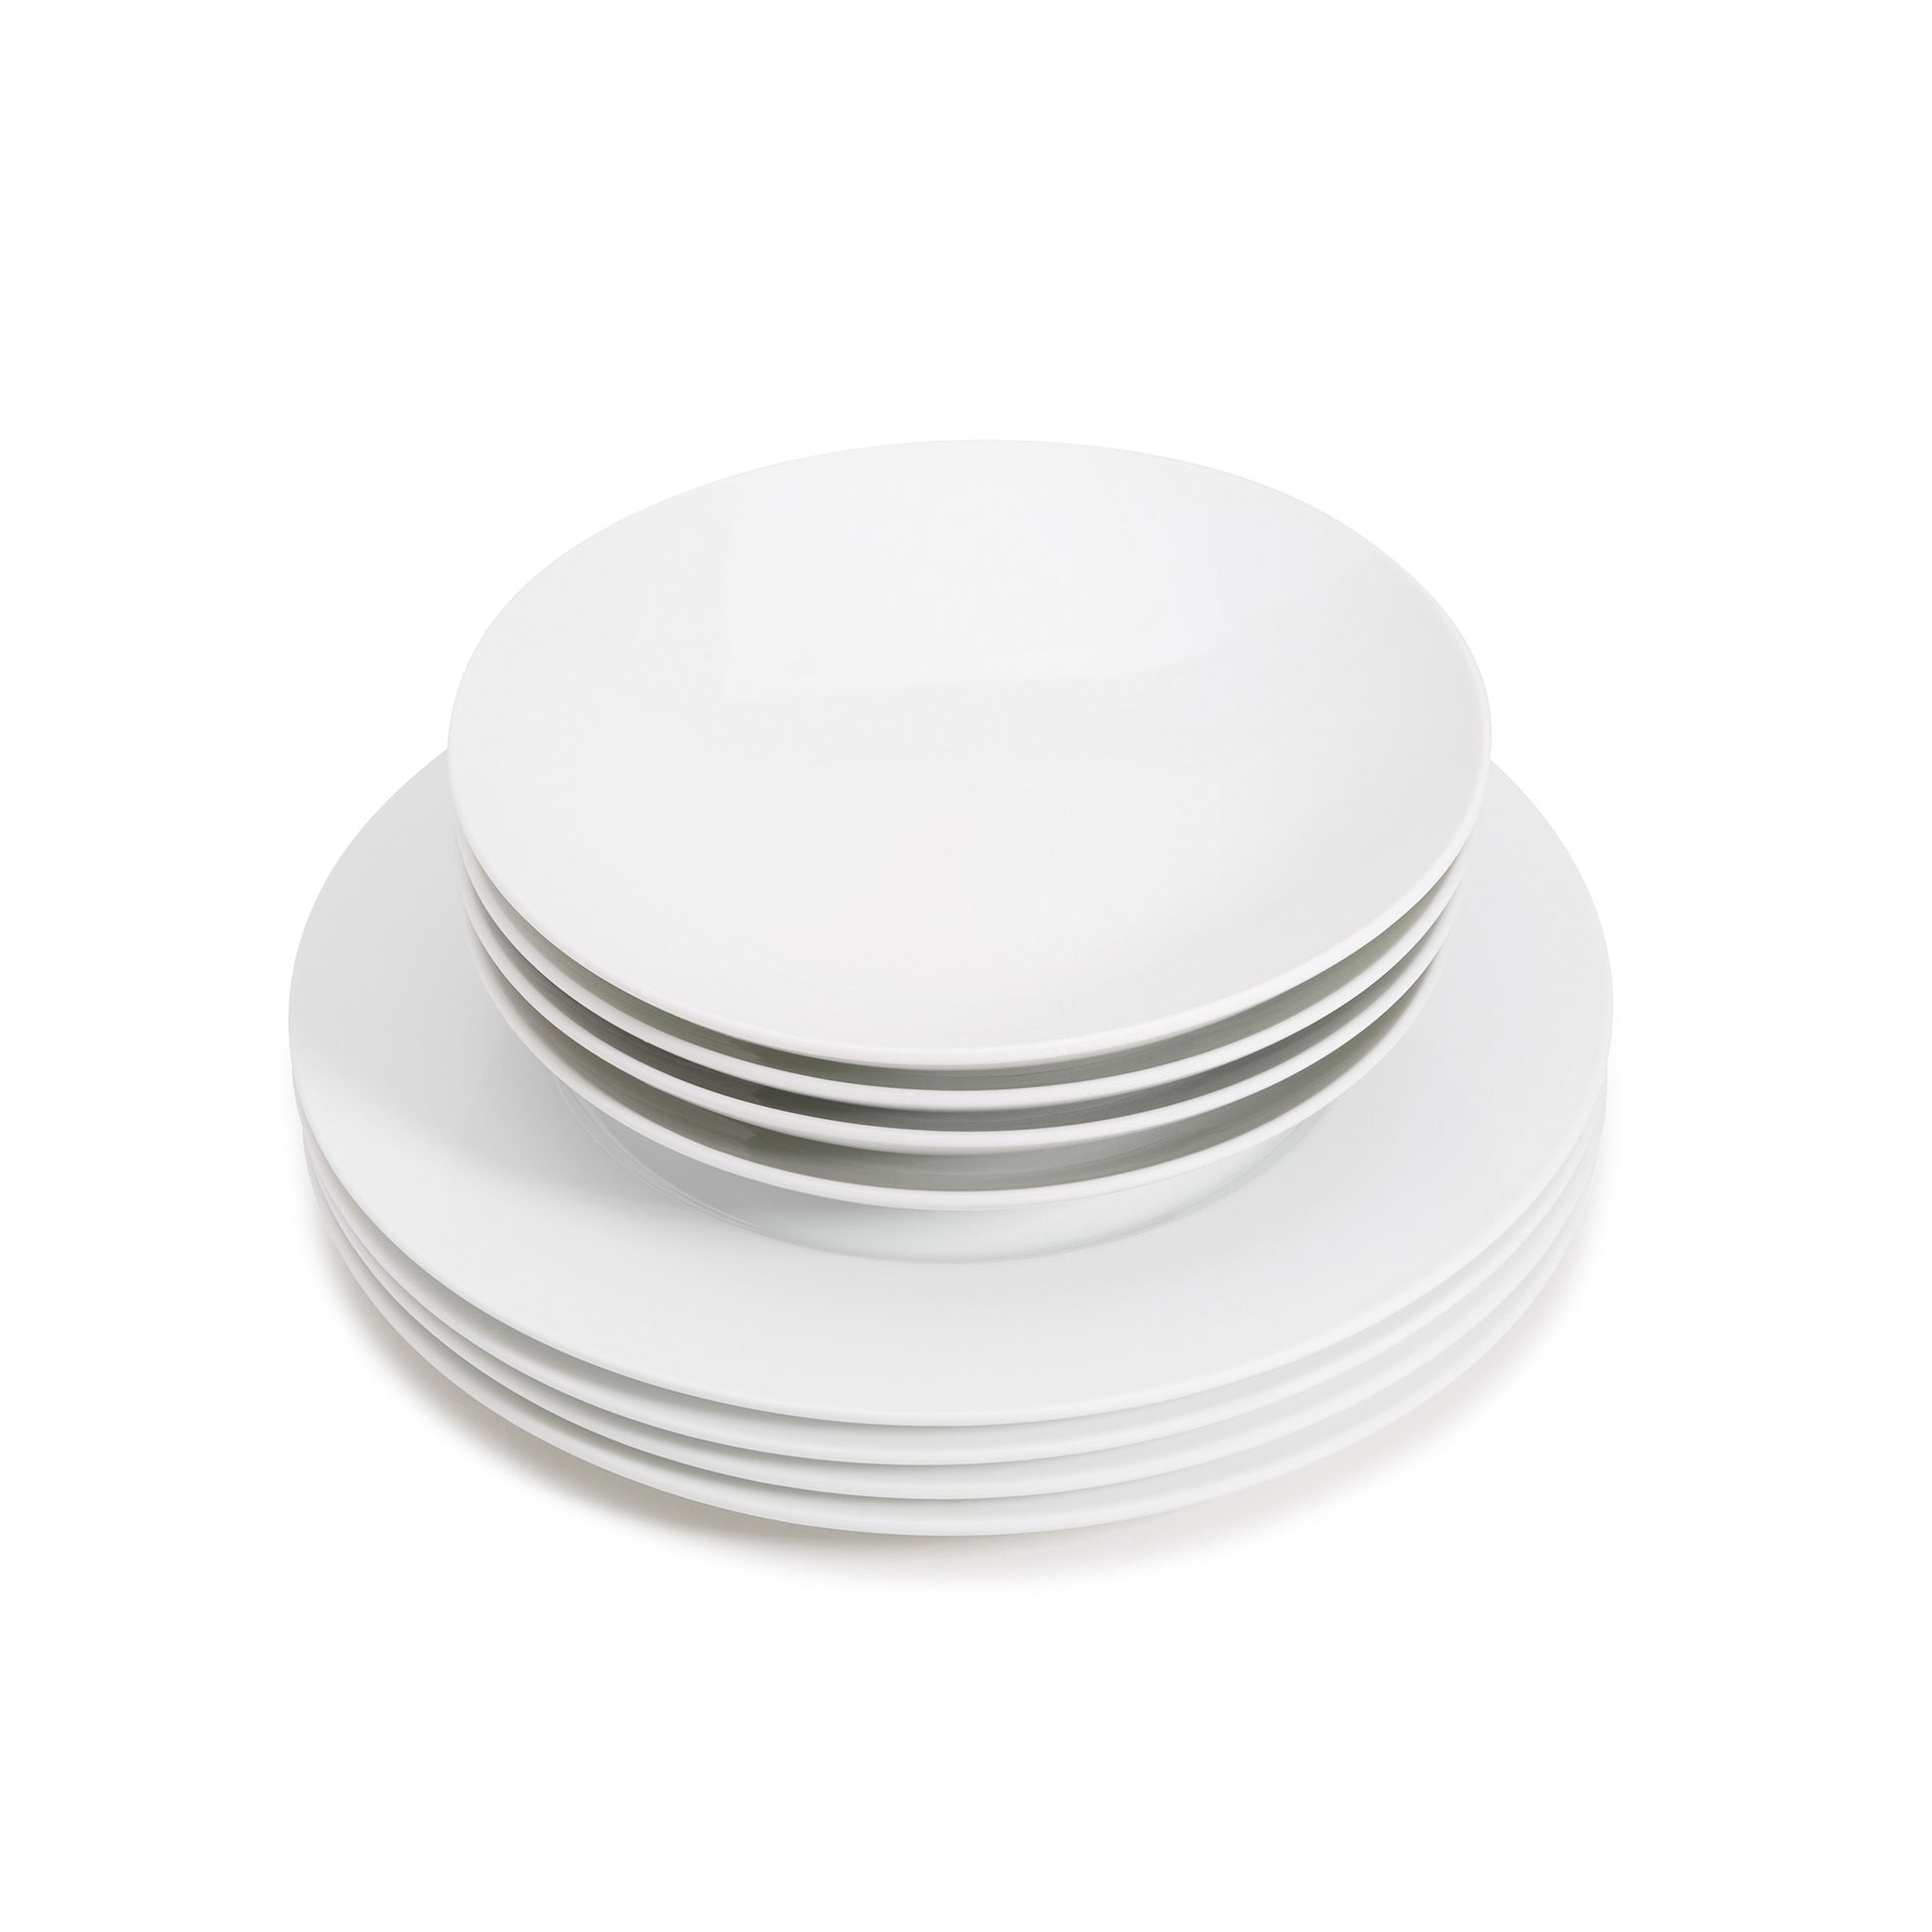 8 piece white porcelain dinnerware set, 11 3/4" wide rim dinner plates, 8" salad/soup bowls, media 4 of 4